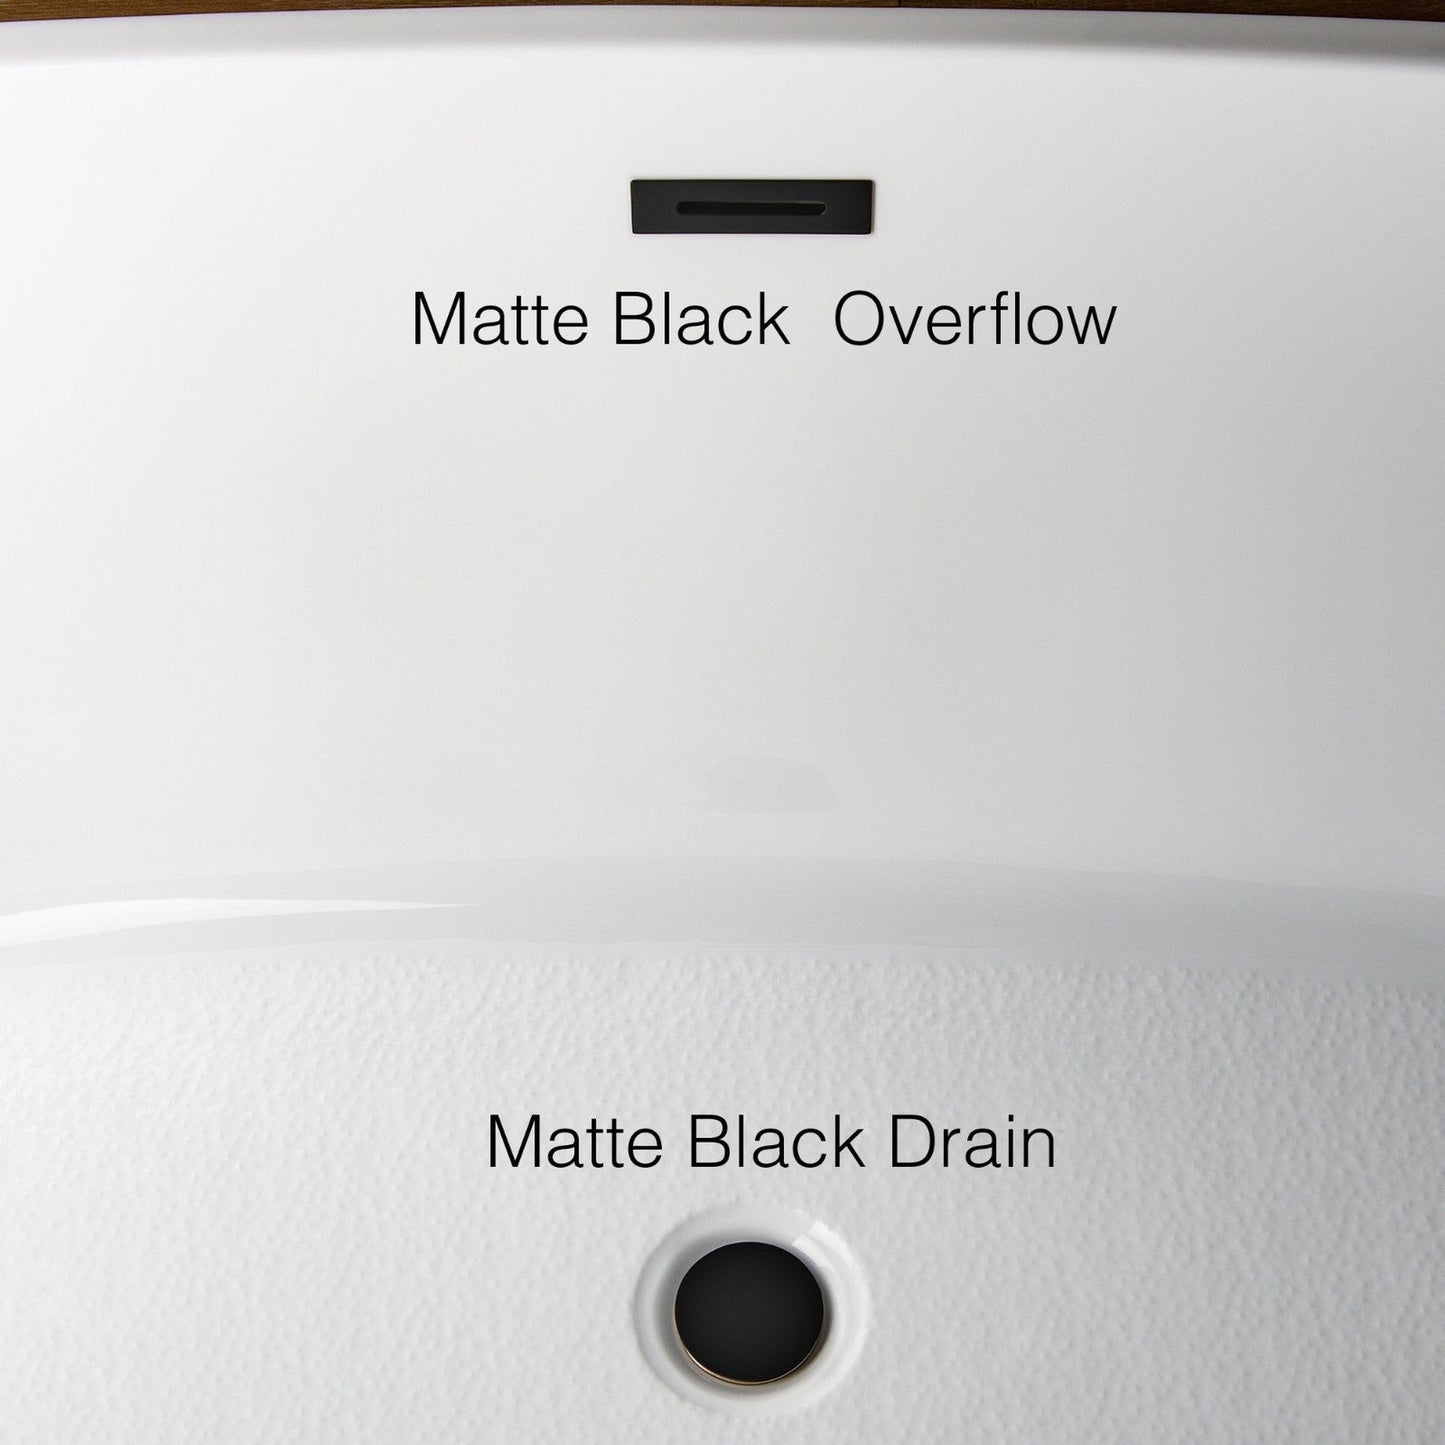 WoodBridge B-0086 67" White Acrylic Freestanding Soaking Bathtub With Matte Black Drain, Overflow, F0072MBVT Tub Filler and Caddy Tray